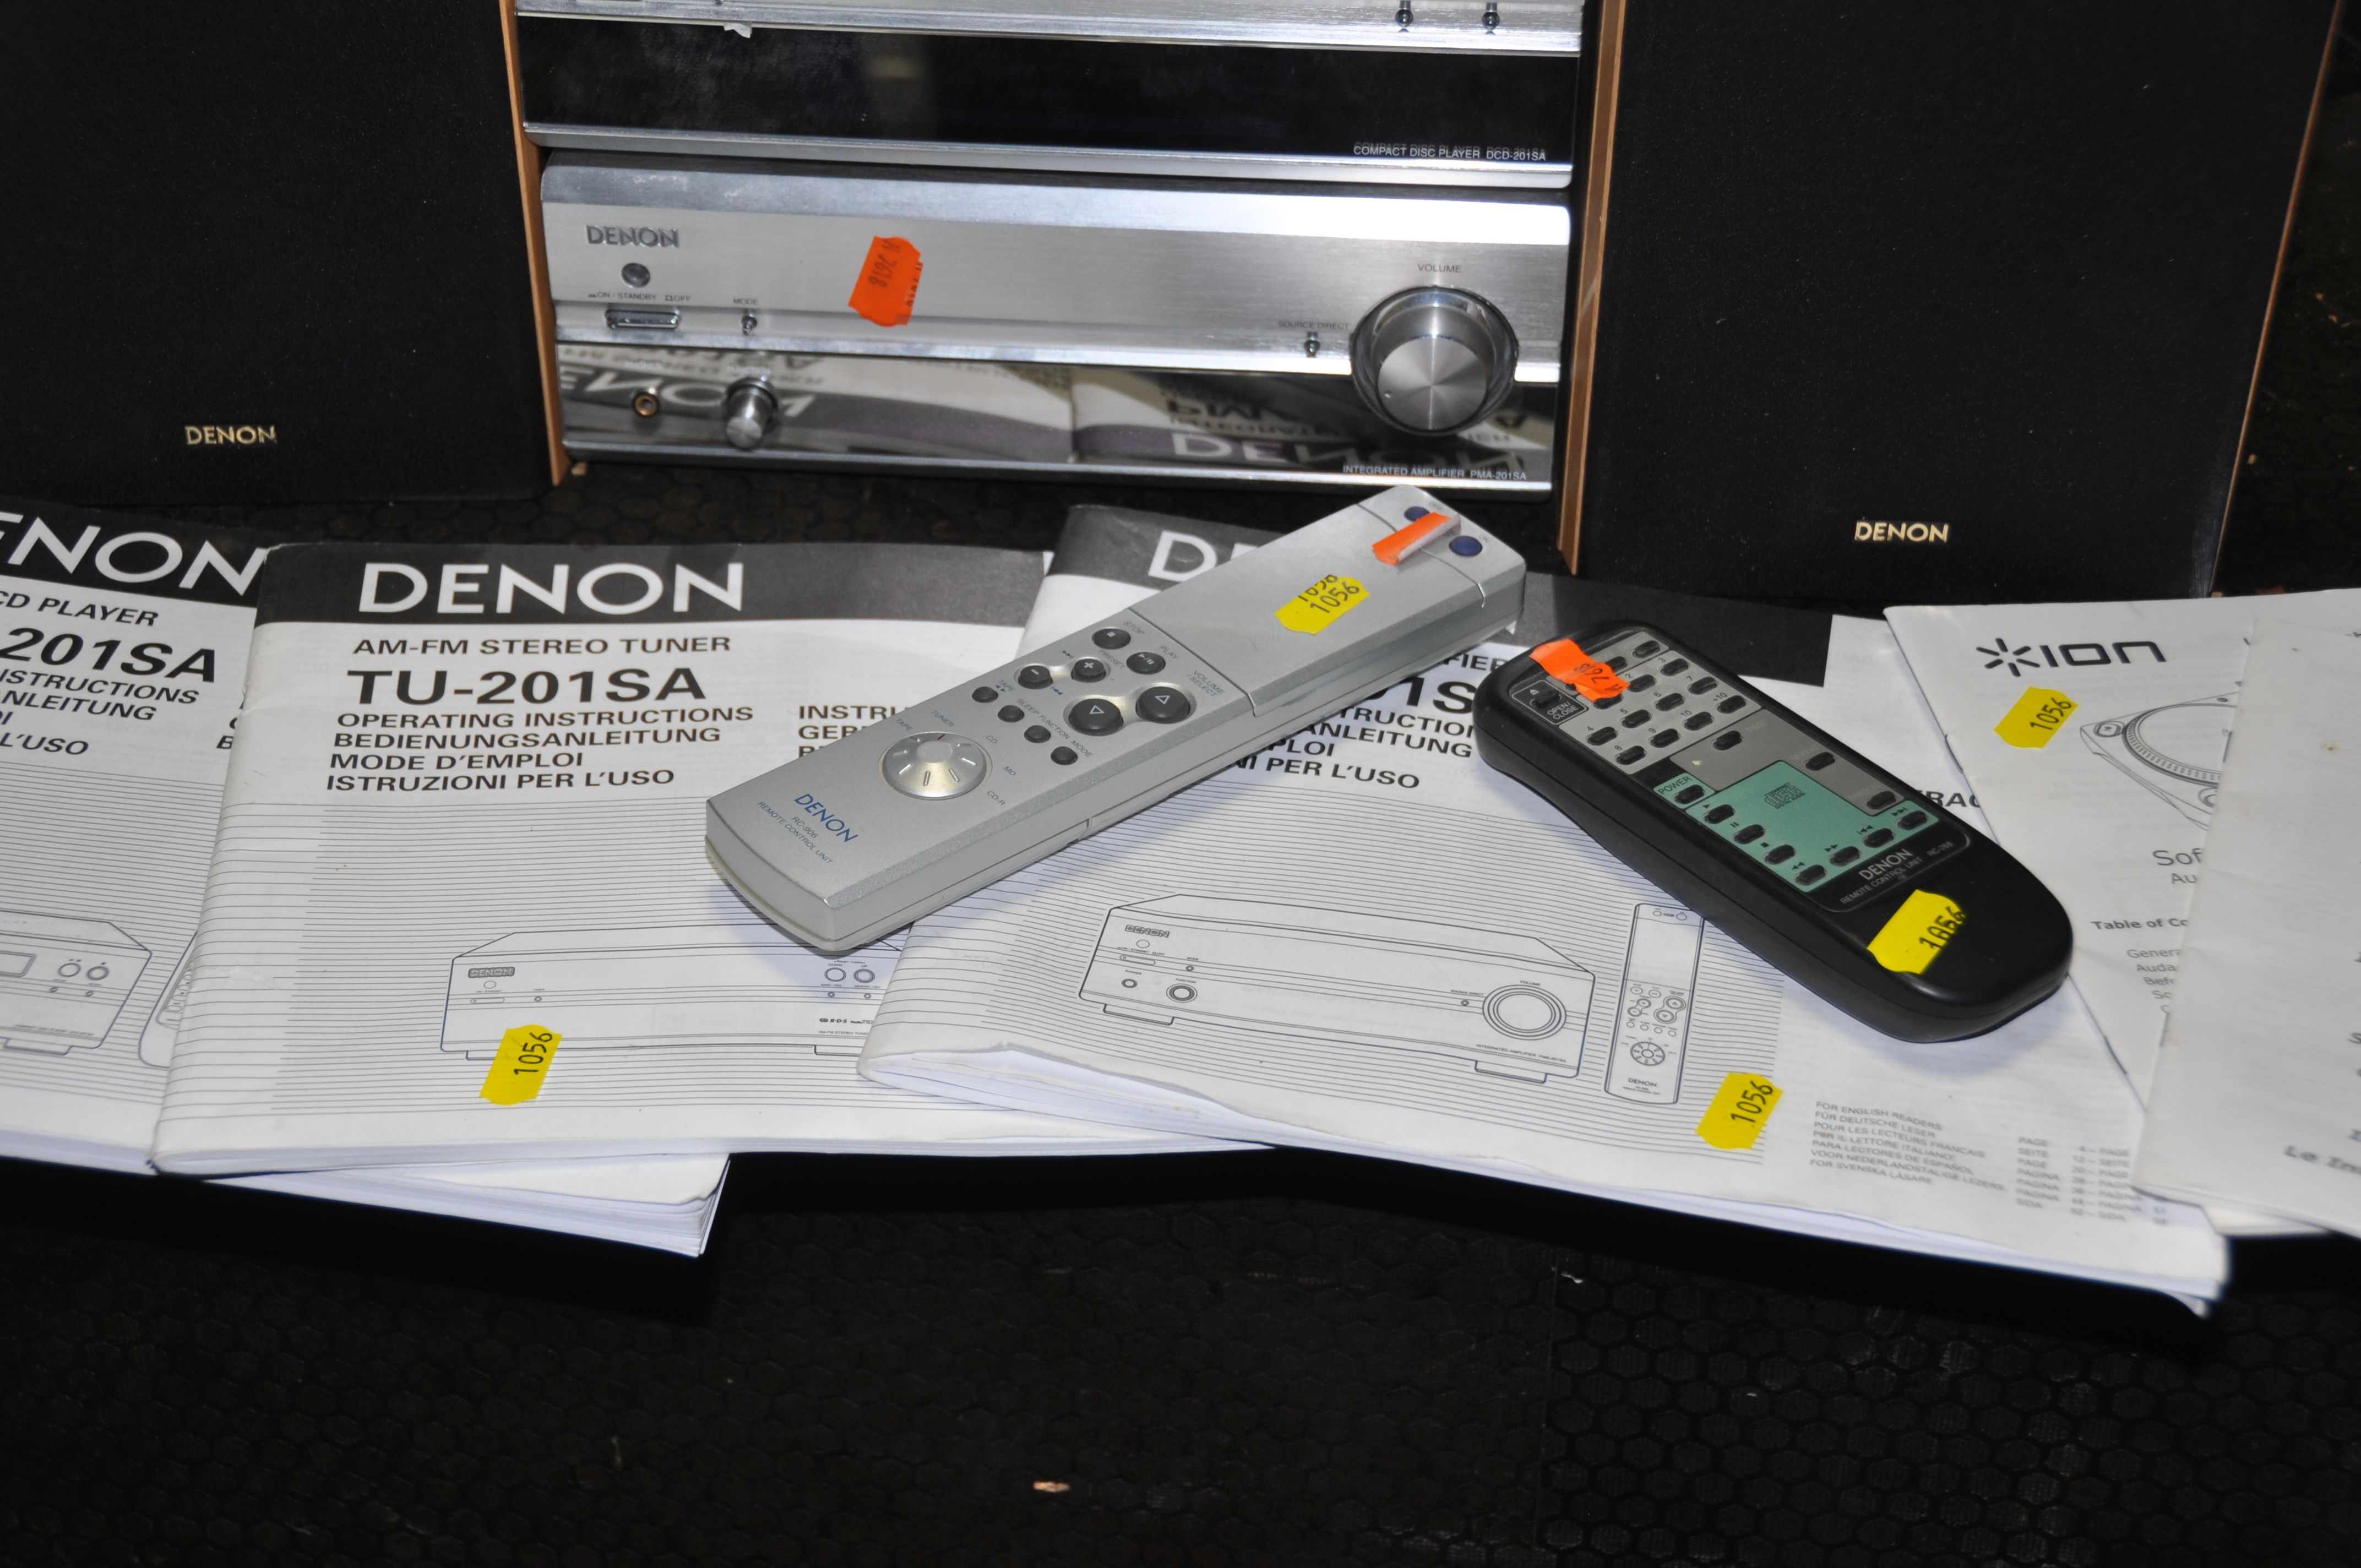 A DENON AND ION COMPONENT HI FI comprising of a PMA-201SA amplifier, a DCD-201SA cd player, a PMA- - Image 3 of 3